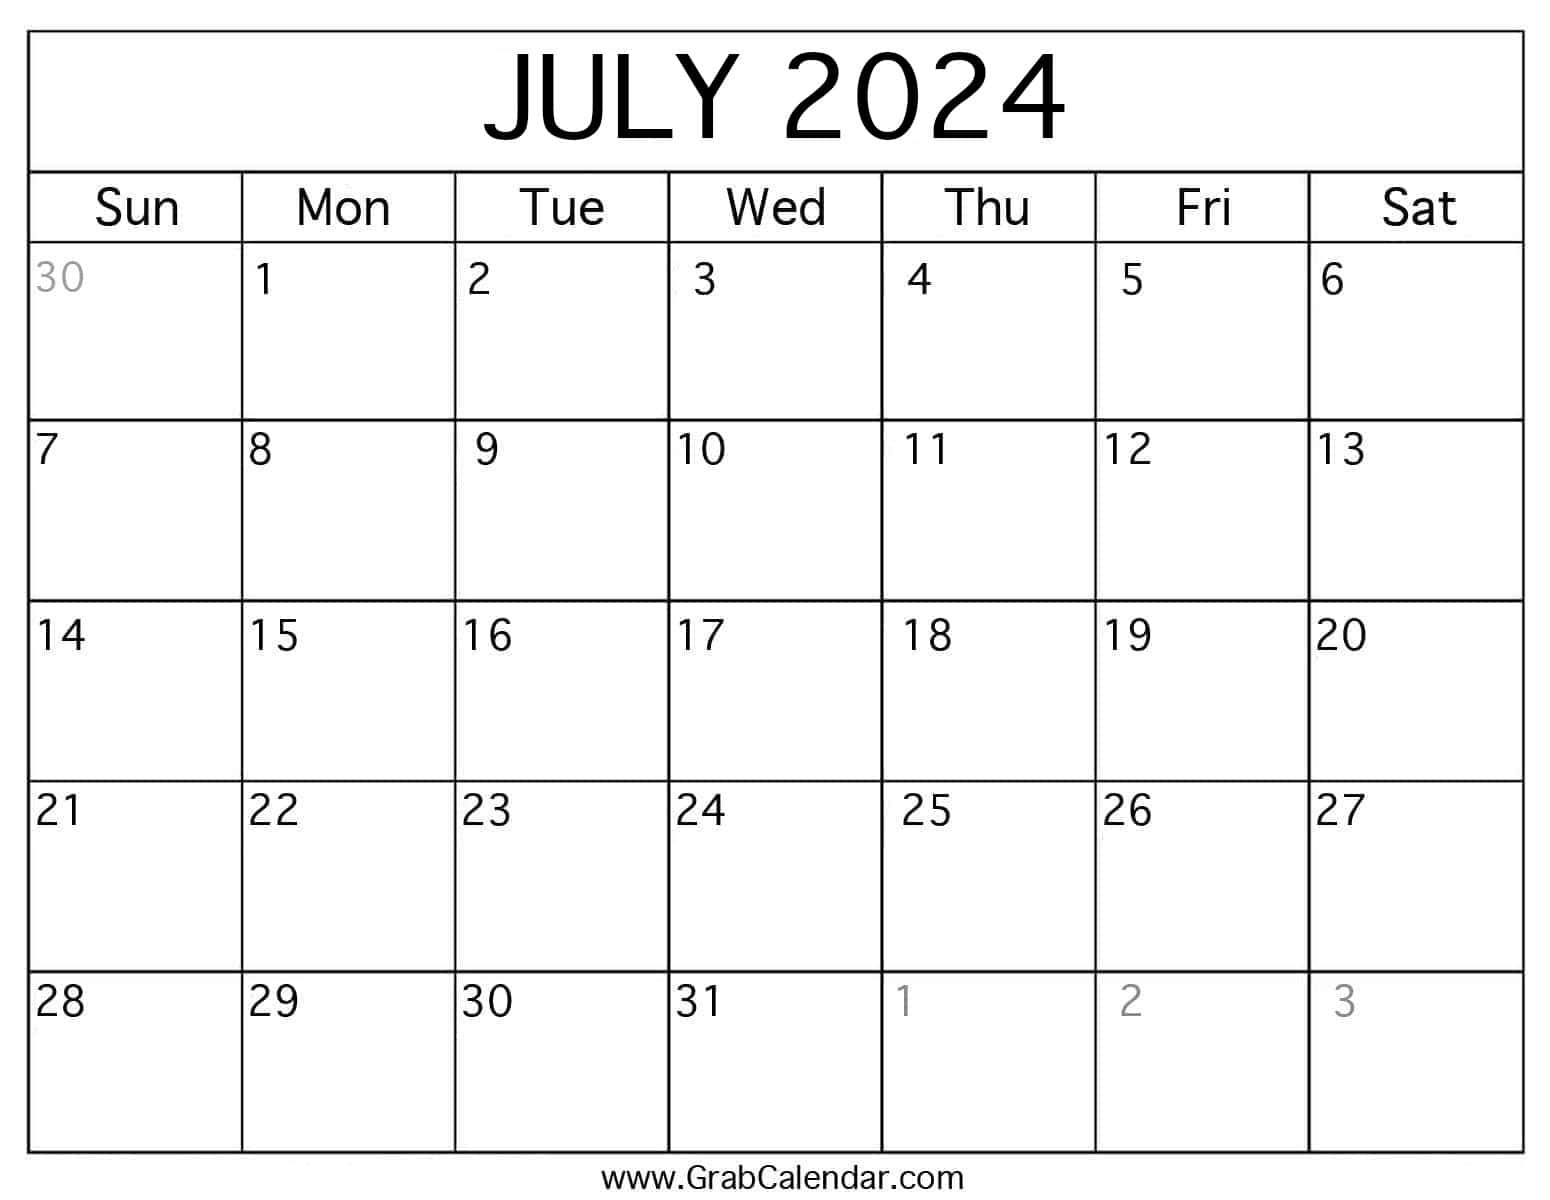 Printable July 2024 Calendar regarding July 2024 Calendar Image